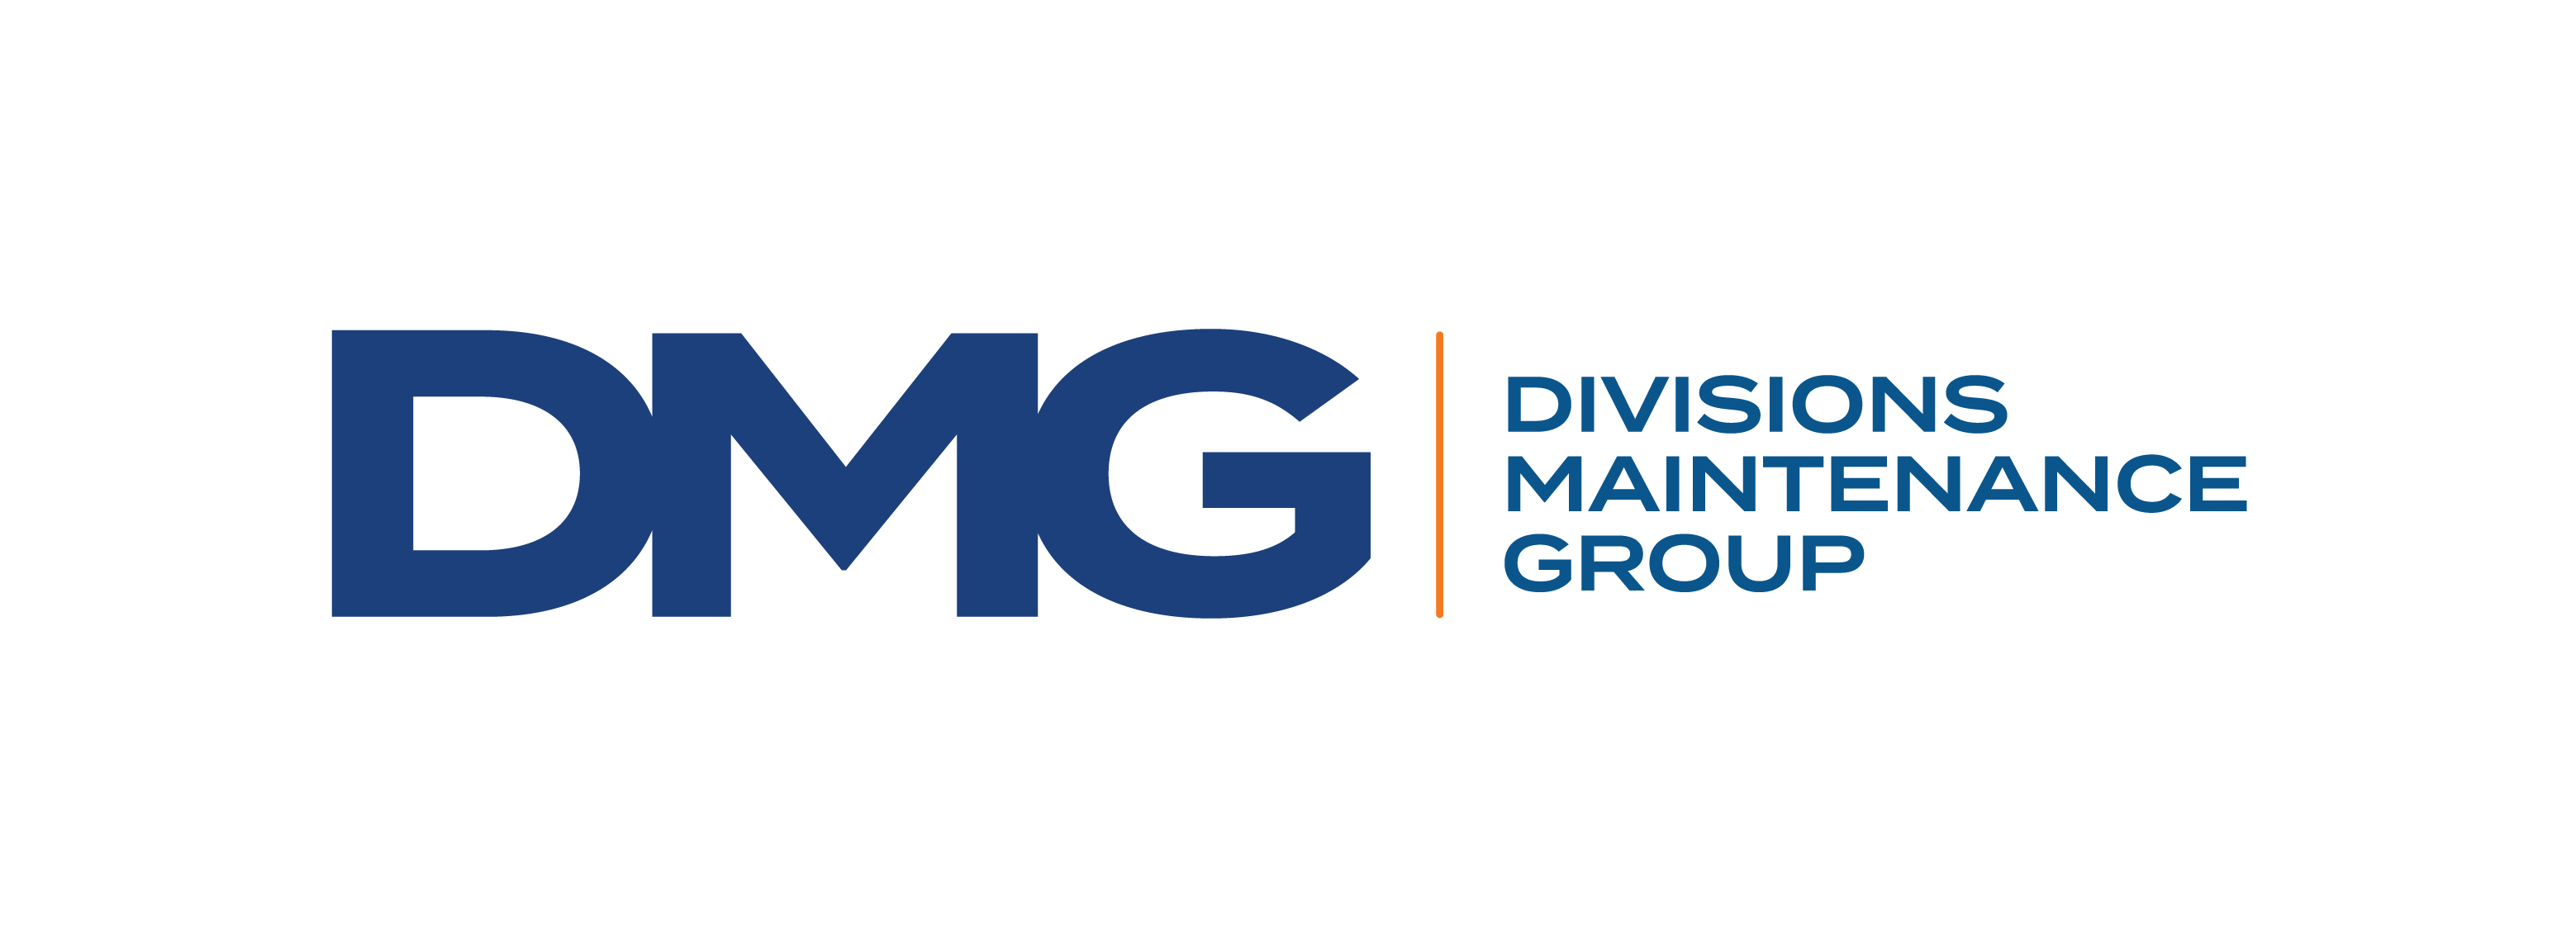 Divisions Maintenance Group logo